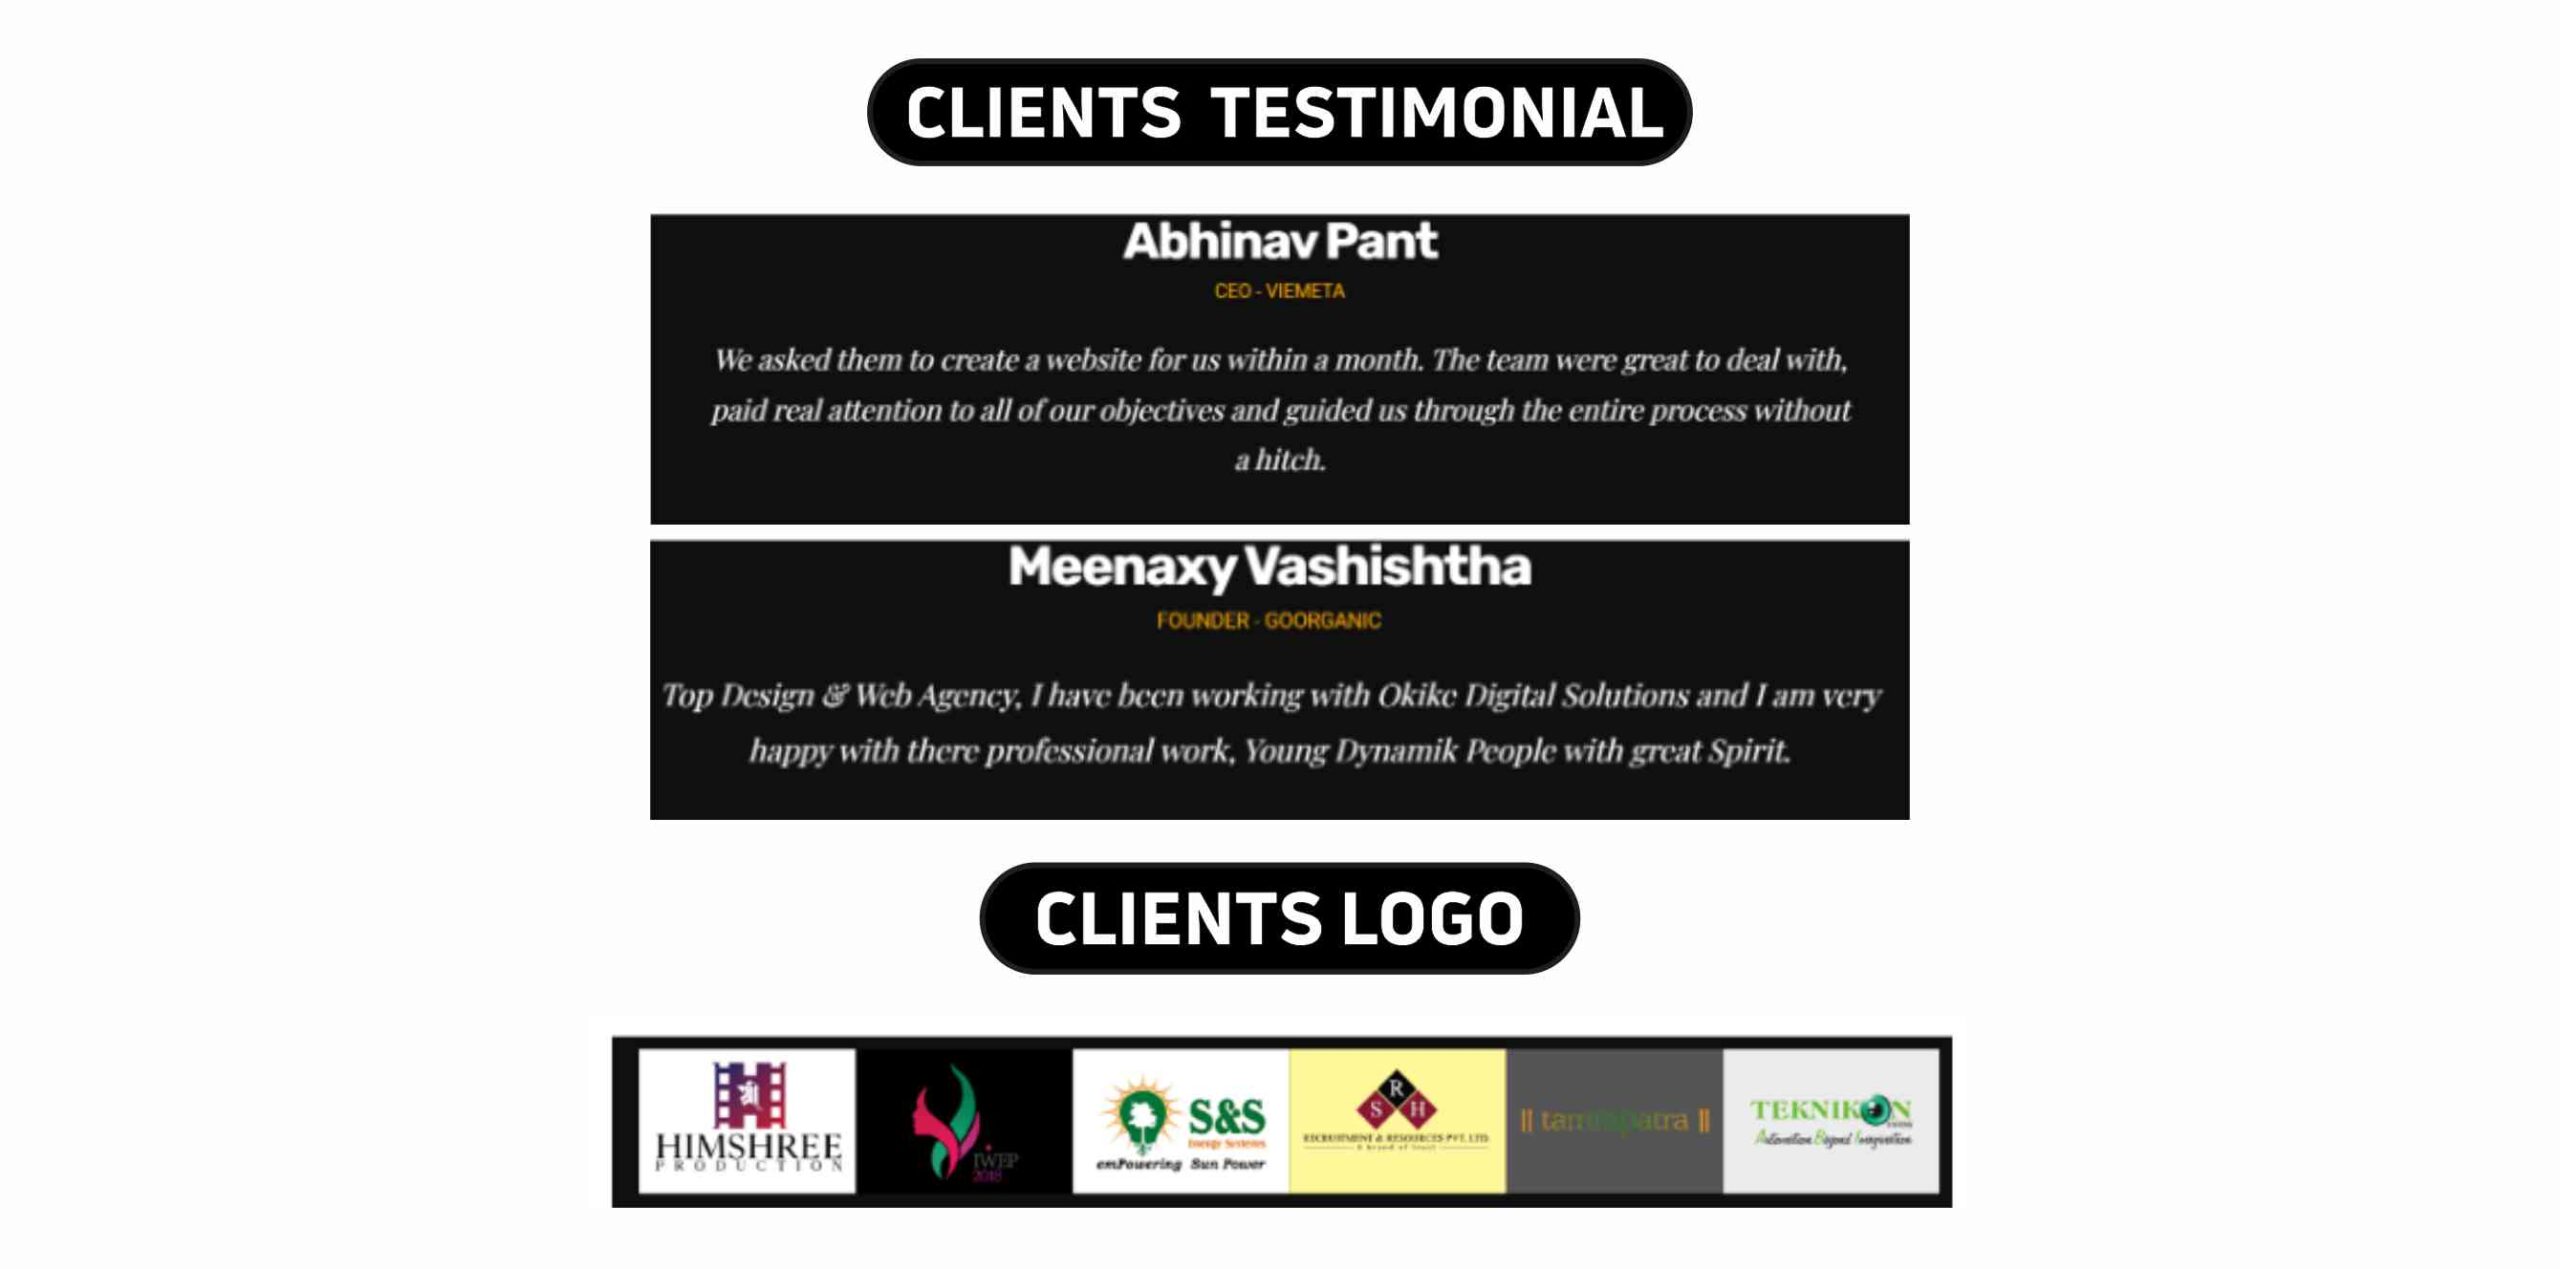 Okike Digital Client Testimonial & Client Logos